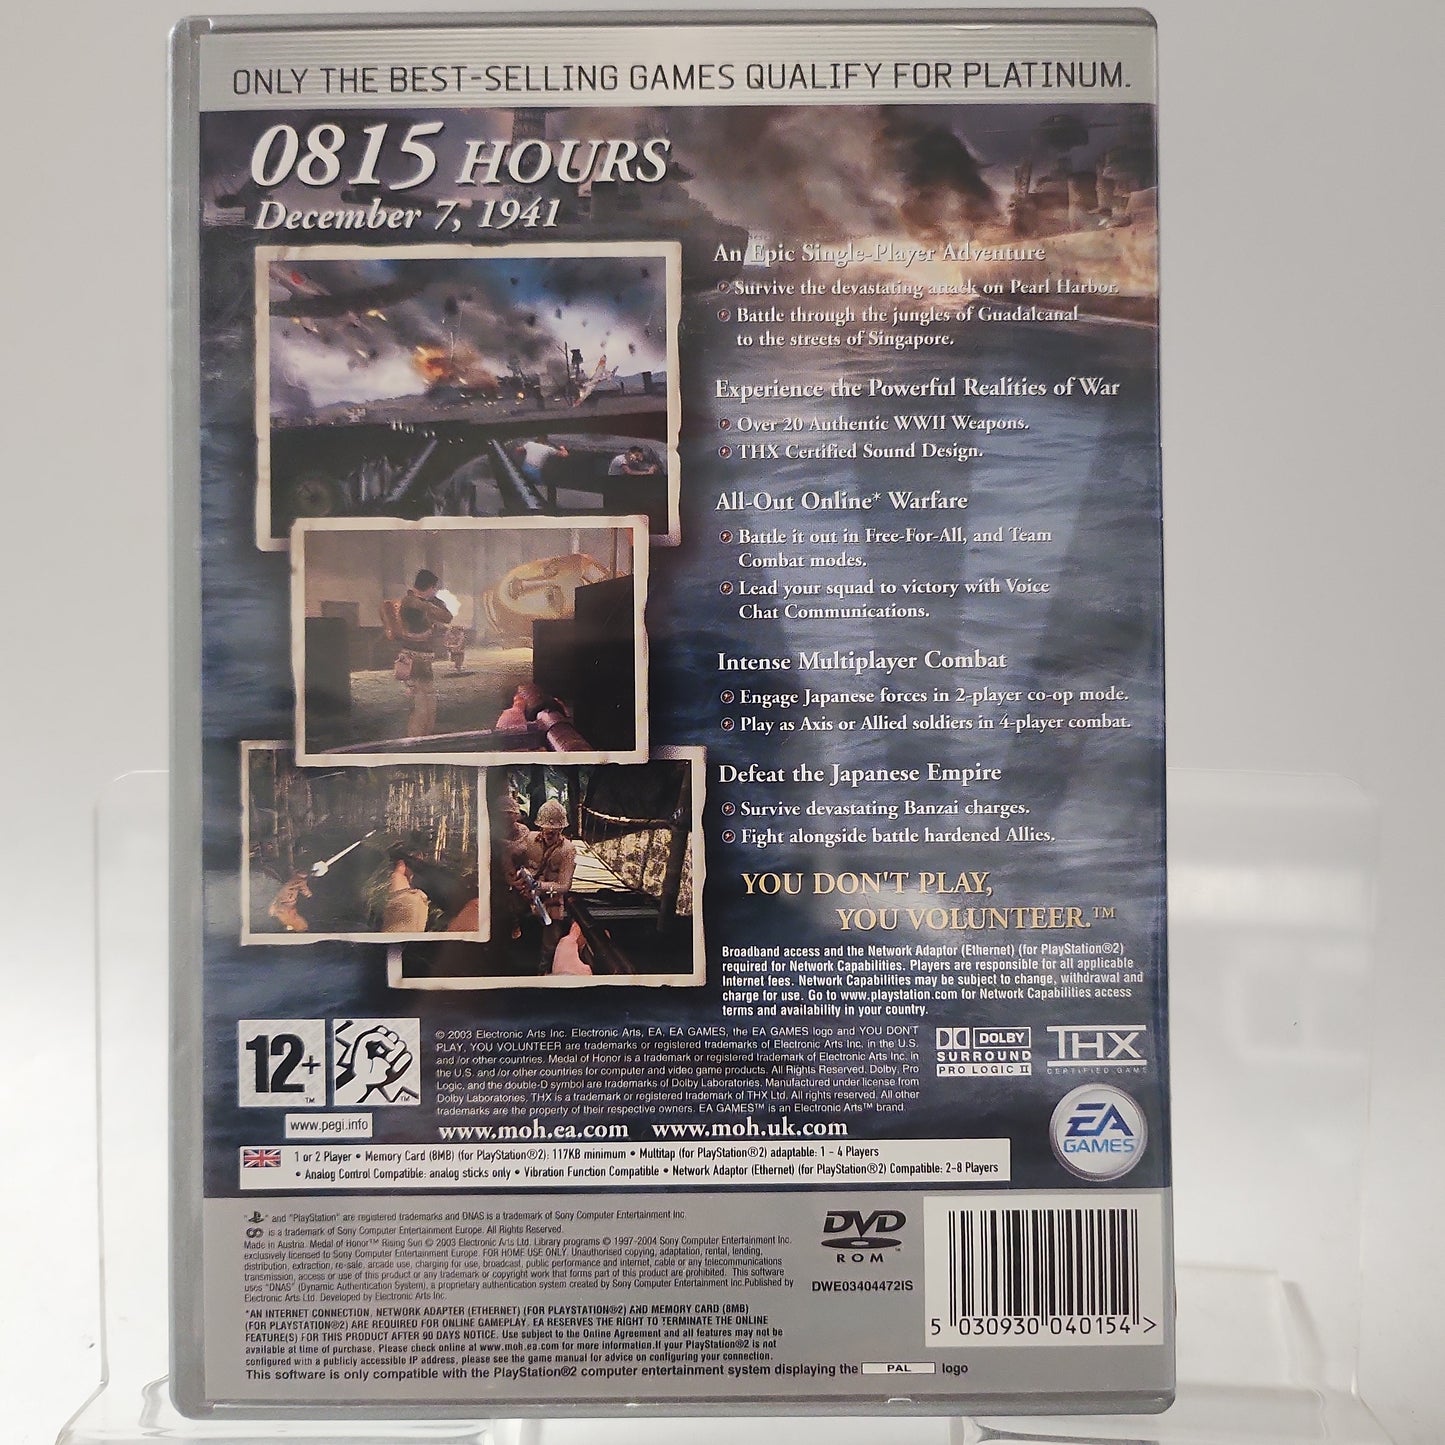 Medal of Honor Rising Sun Platinum (No Book) PlayStation 2